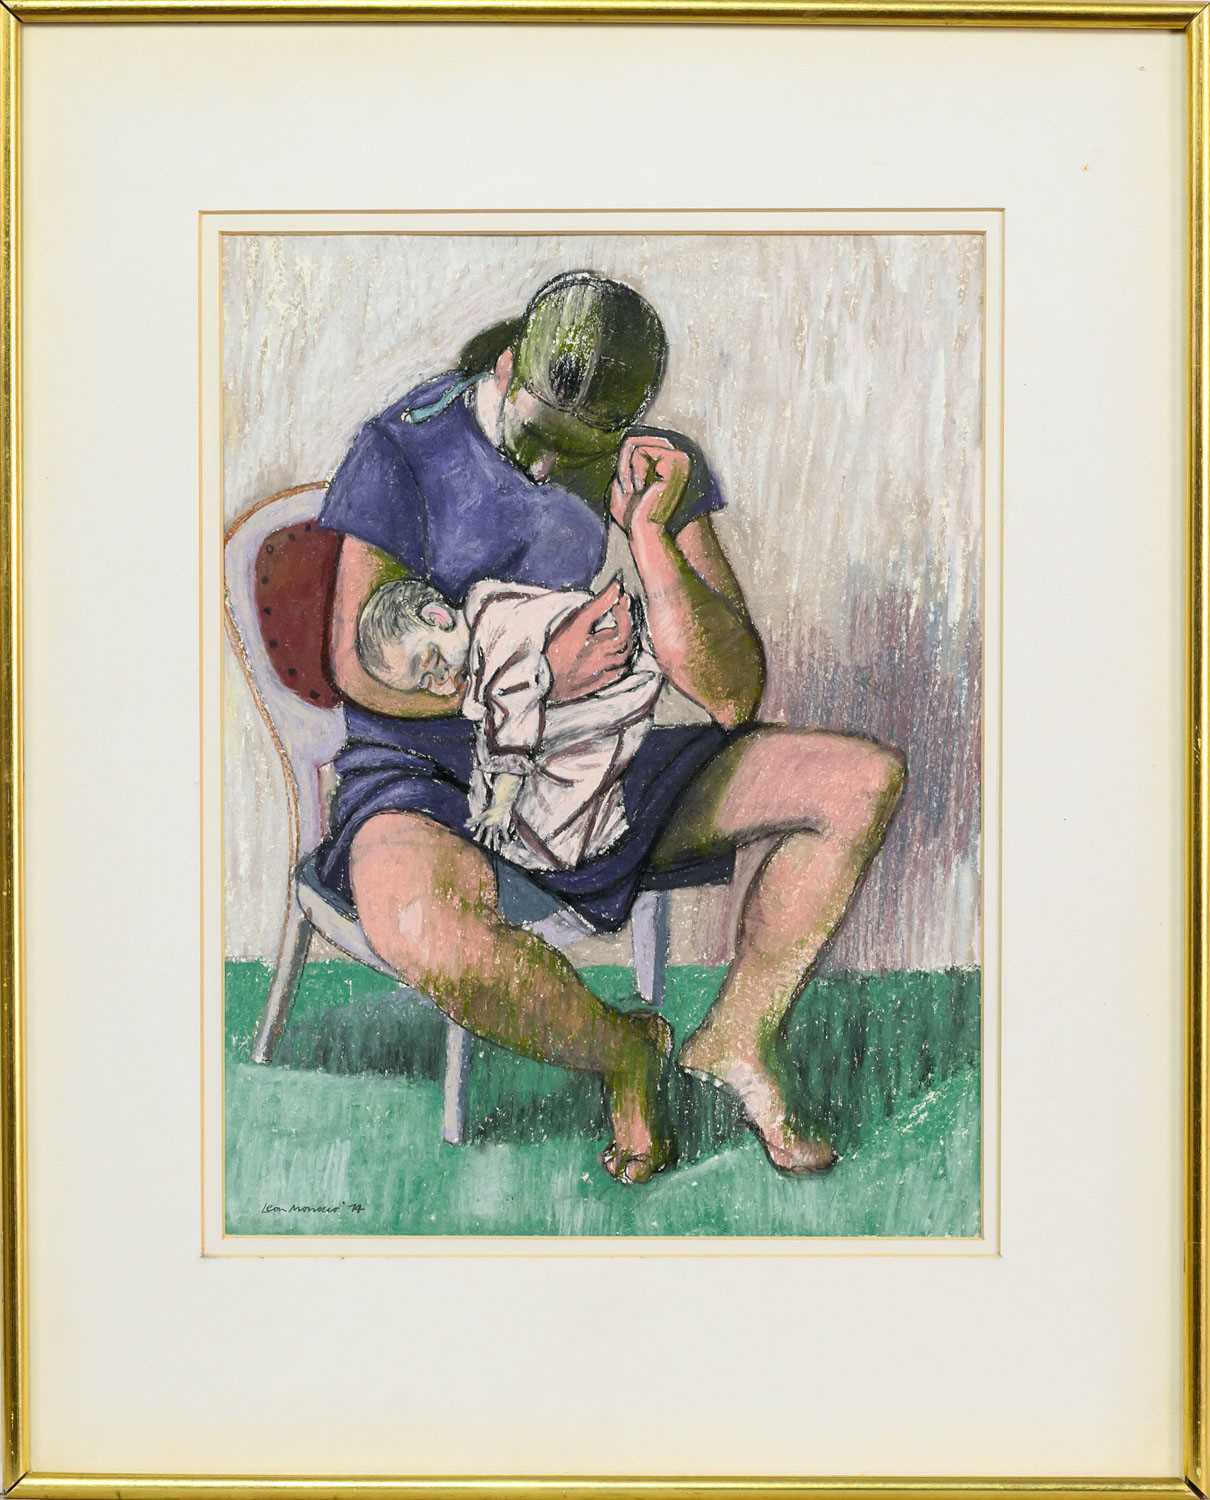 * LEON MORROCCO RSA RGI (SCOTTISH b. 1942), SEATED FIGURE WITH CHILD